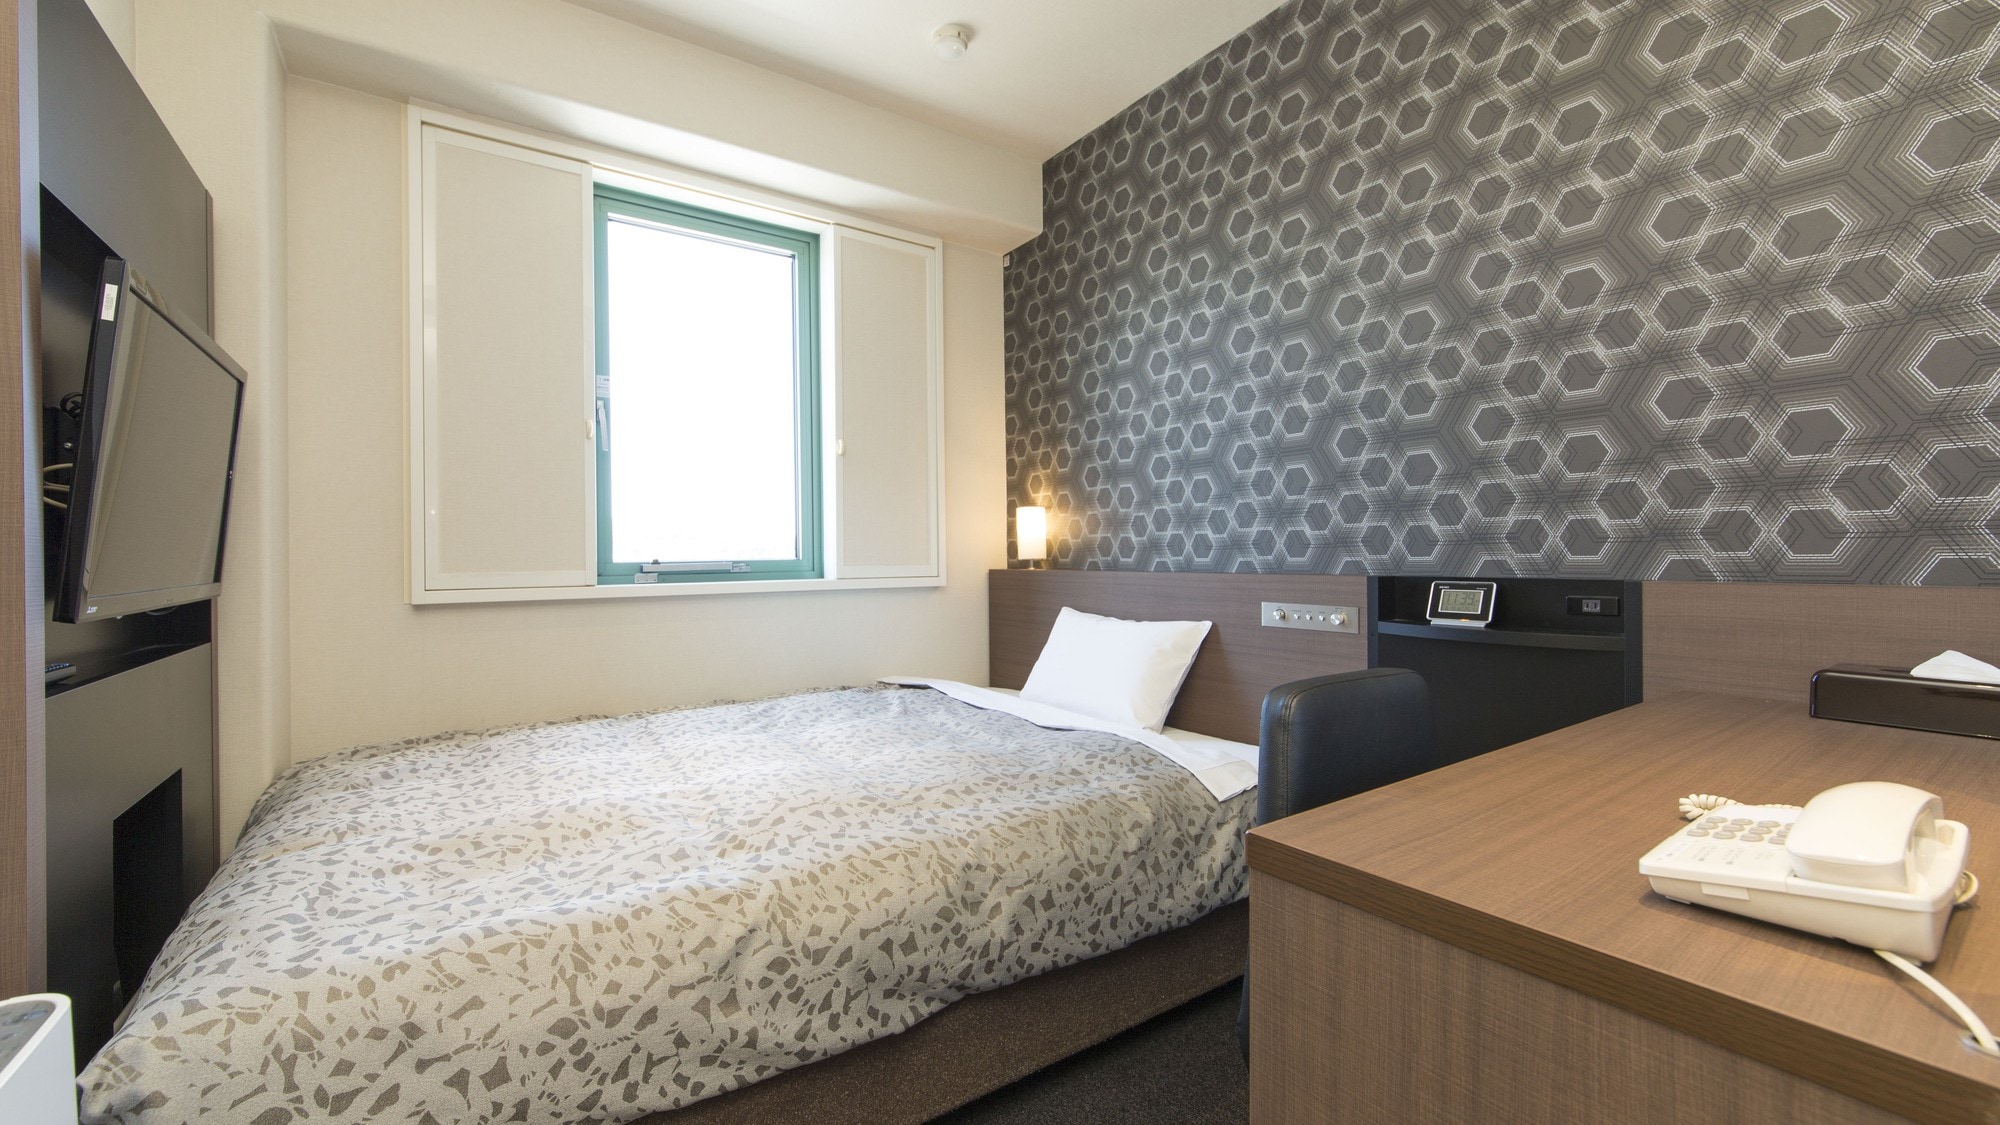 Standard single room / 12㎡ 1 double bed (140cm)